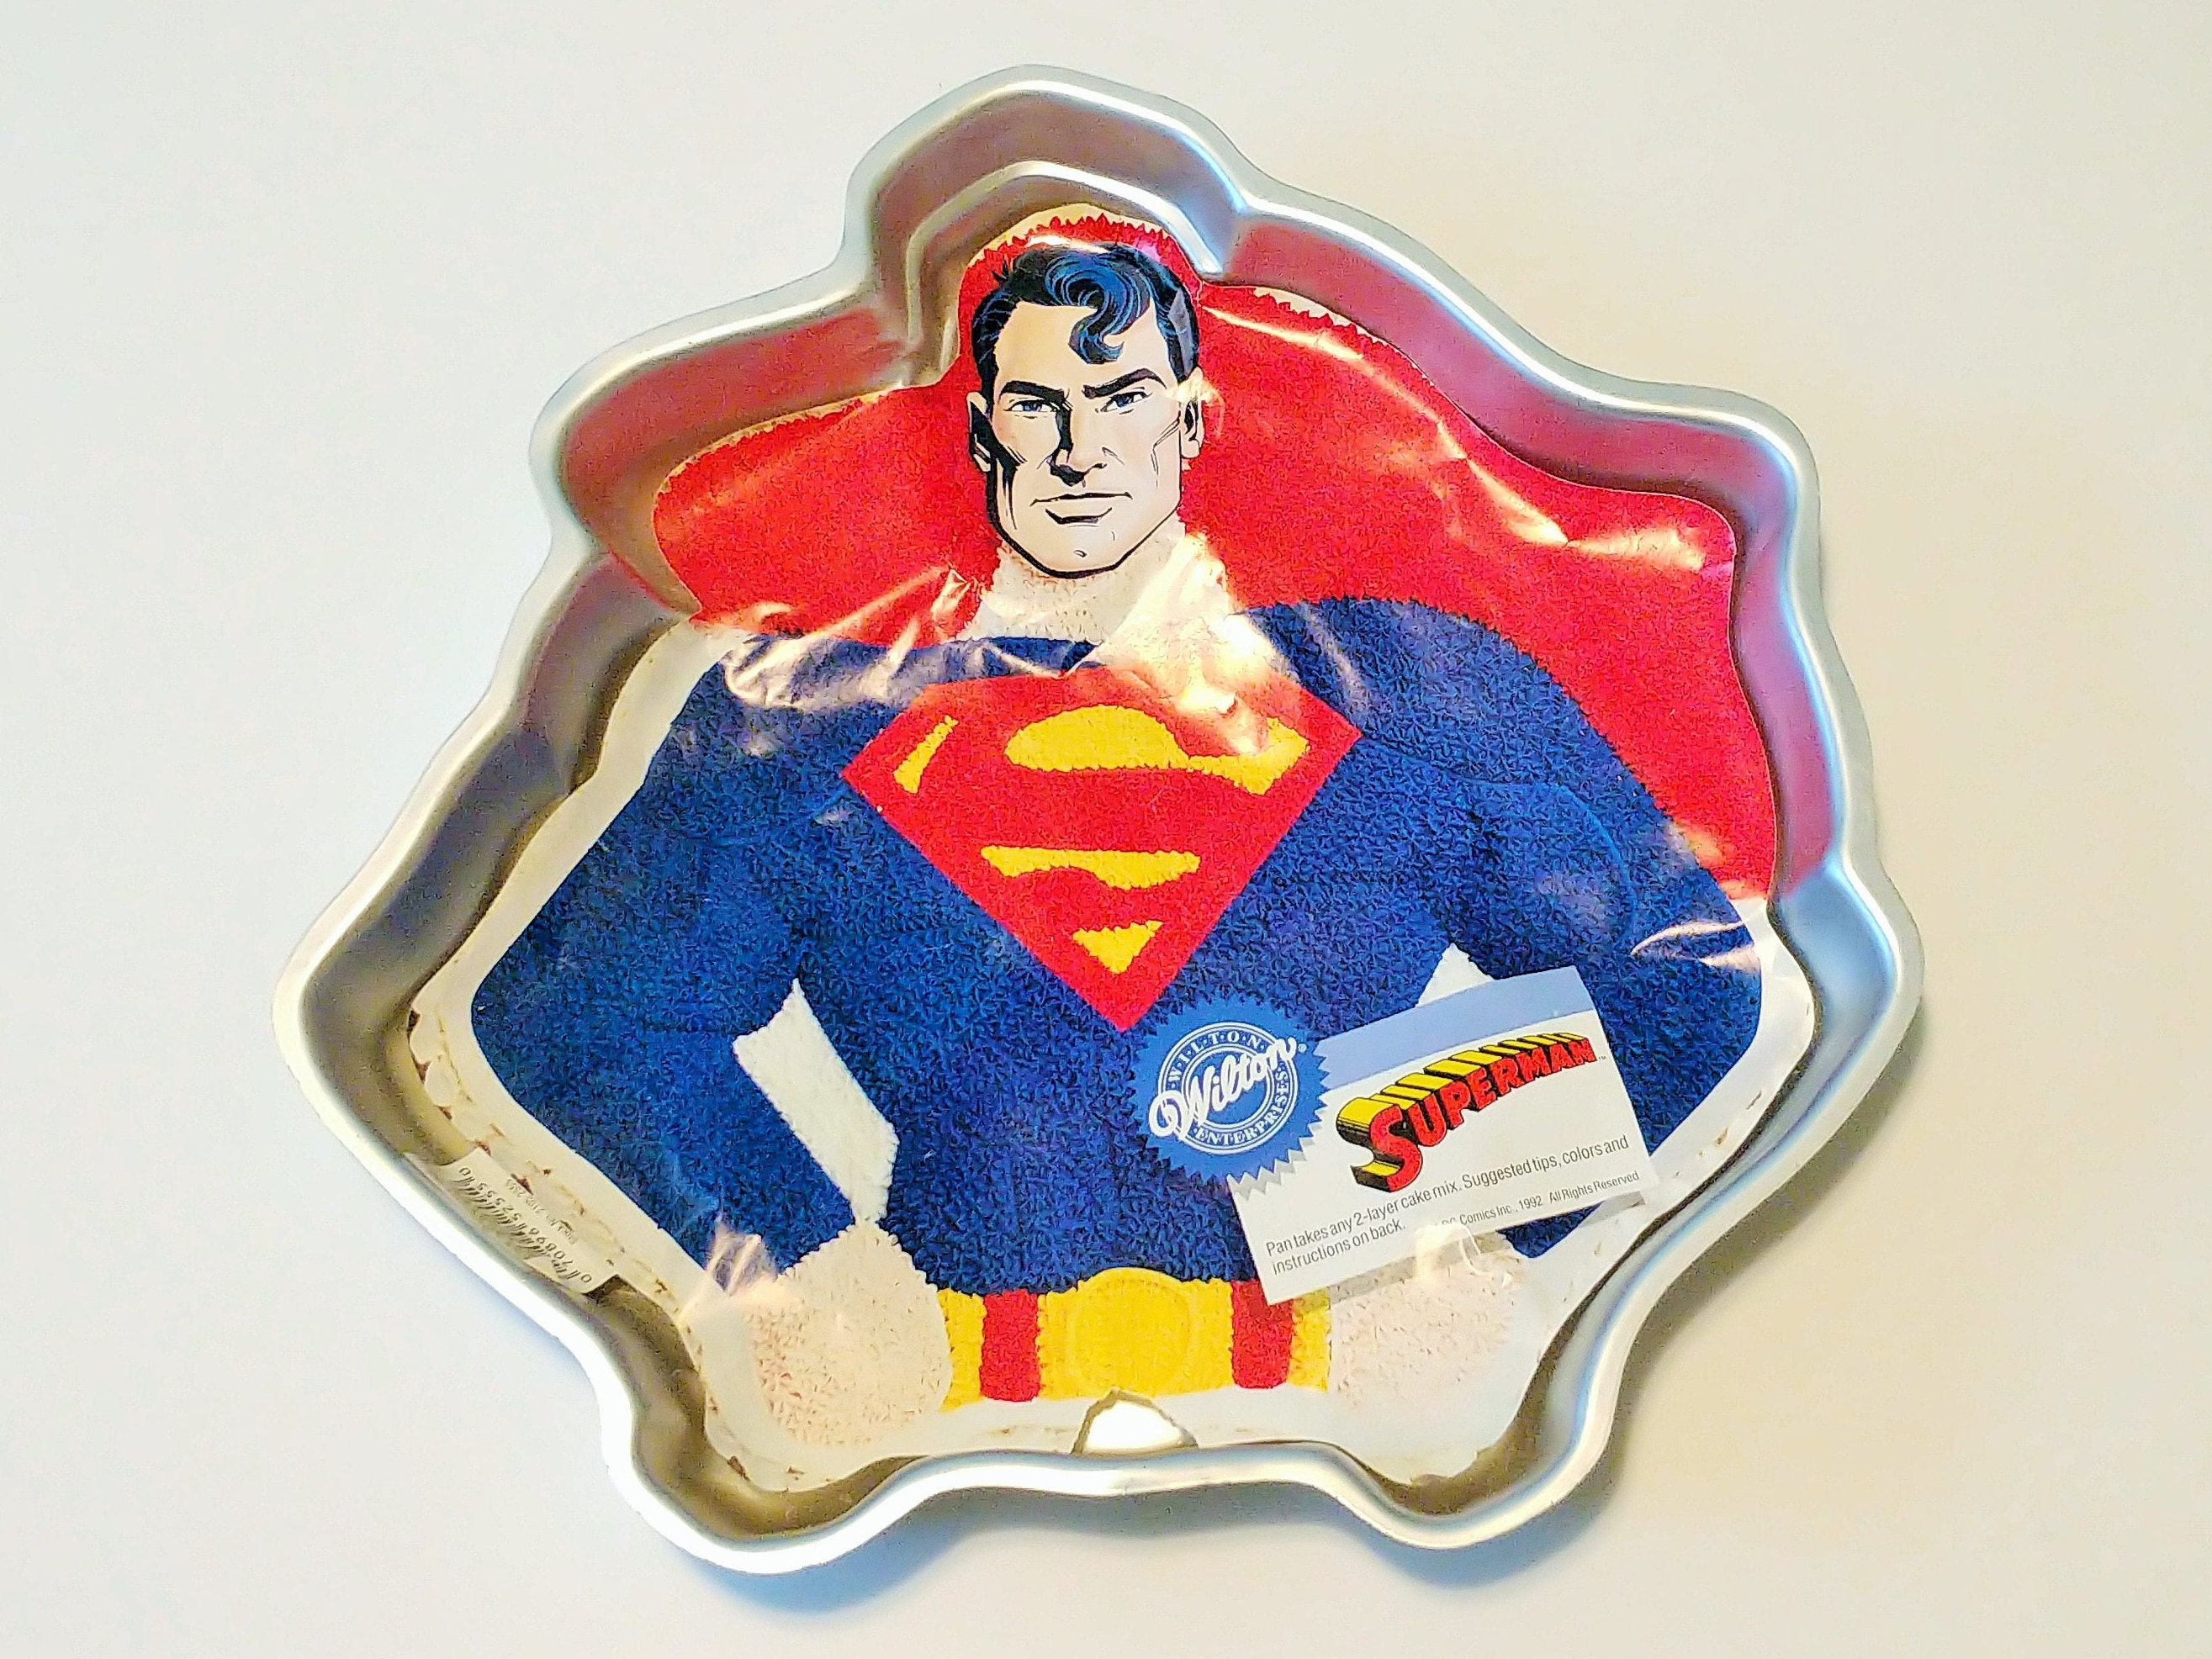 superhero cakes (image heavy) | Christian Gamers Alliance